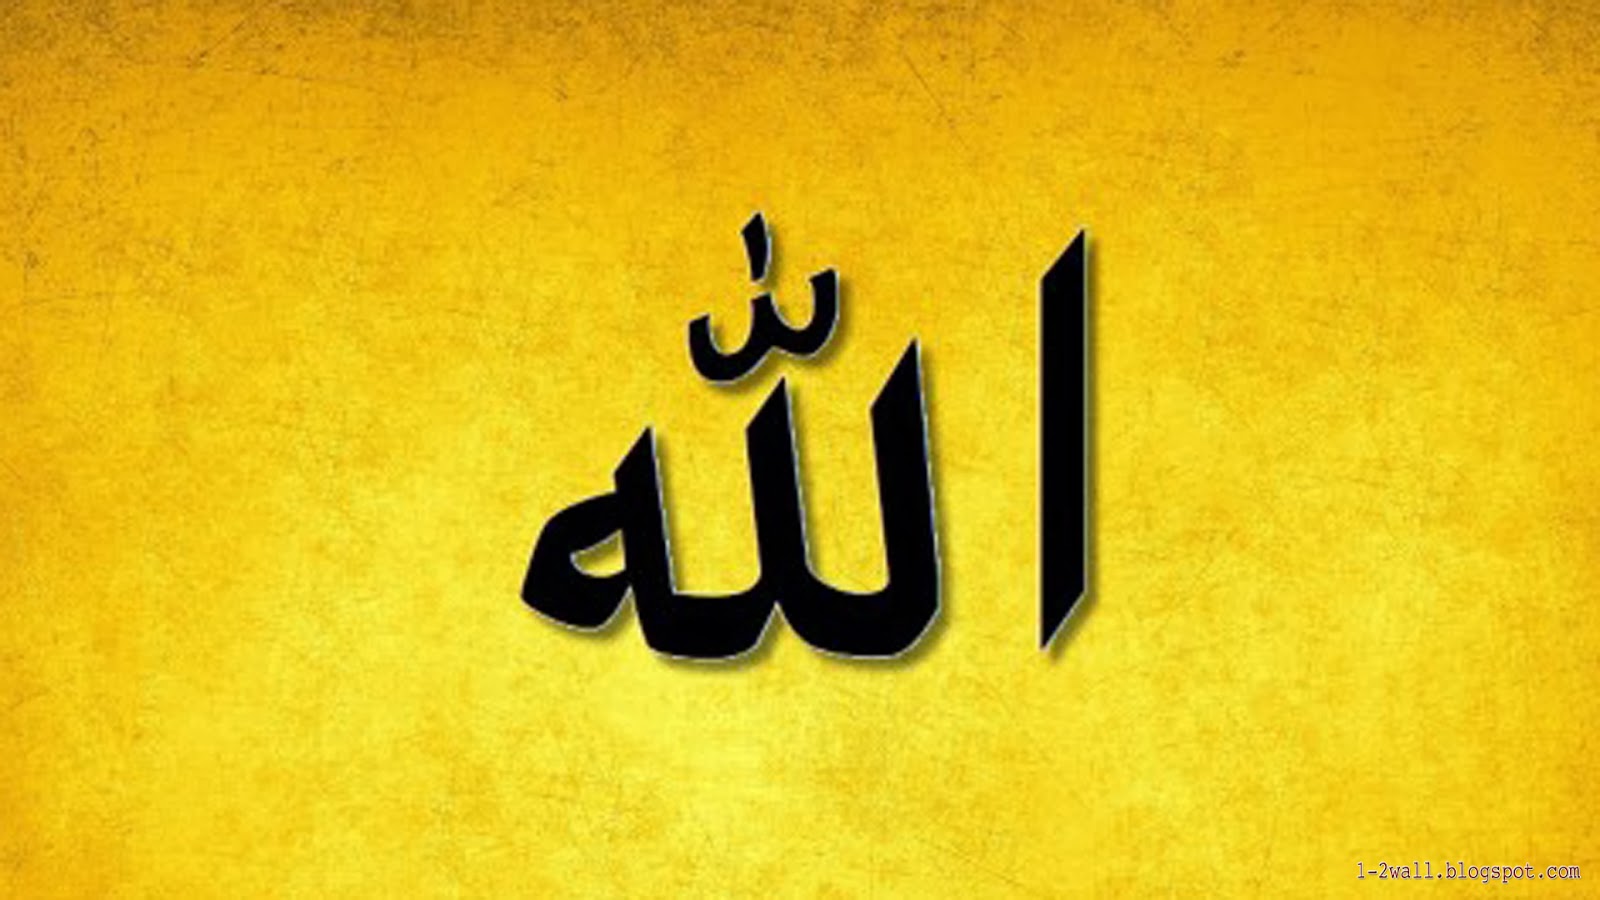 Allah Names HD Wallpapers, Islamic Wallpapers